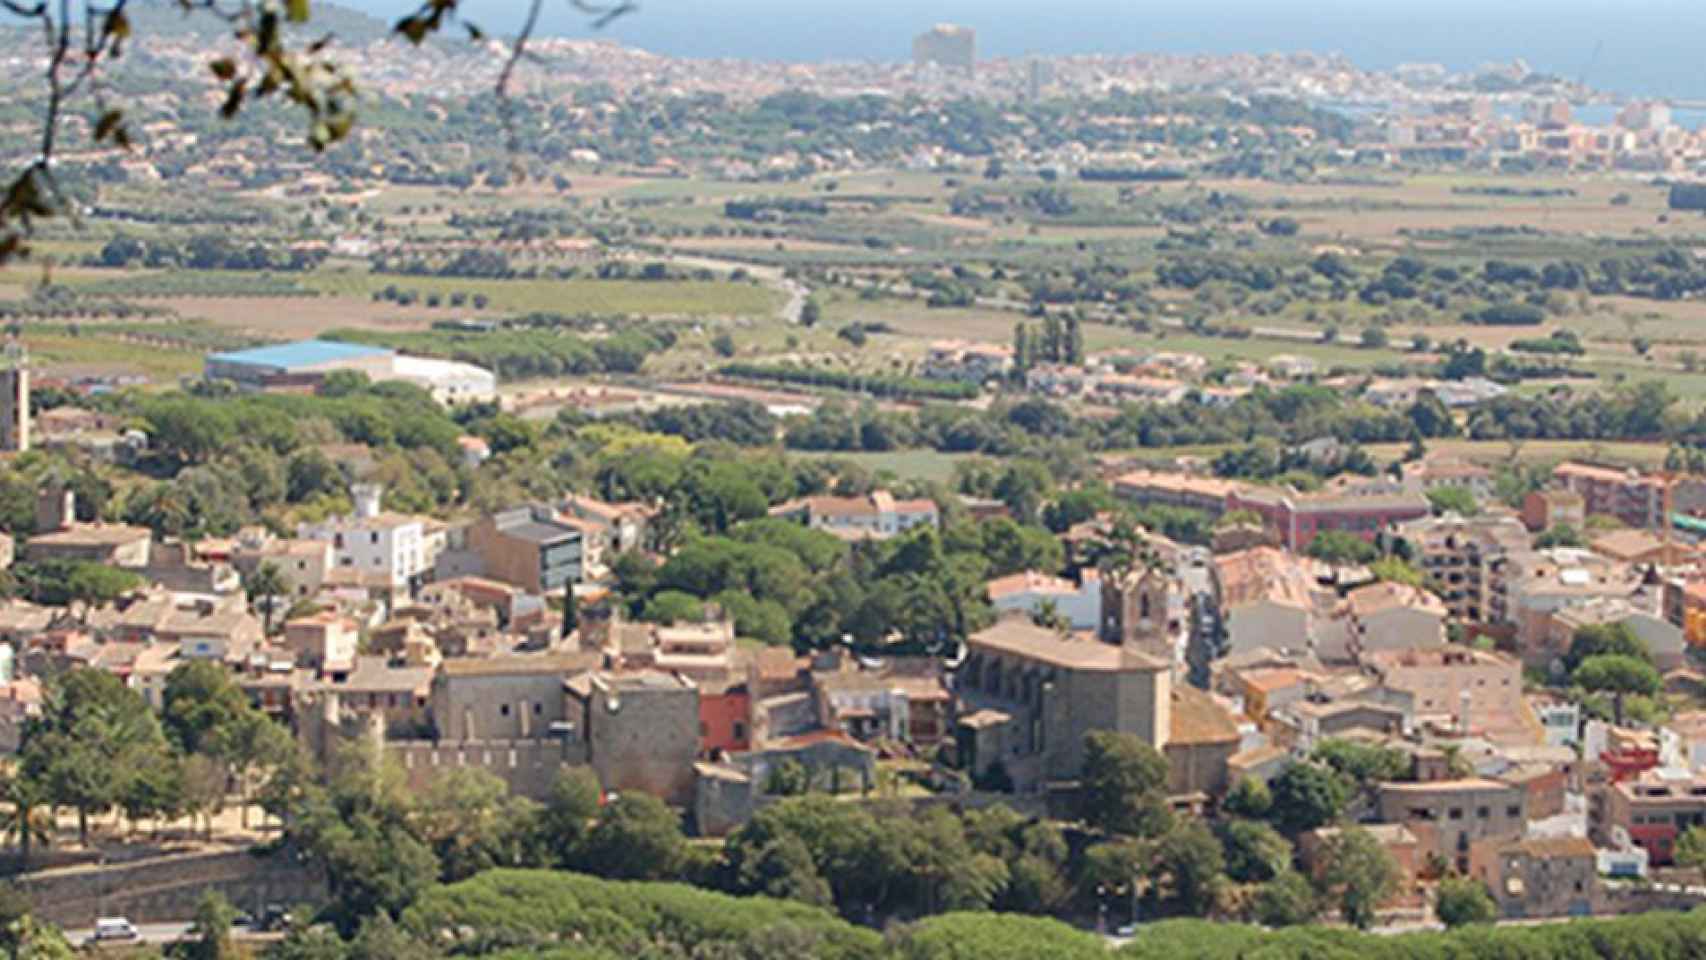 Vista aérea de Calonge i Sant Antoni